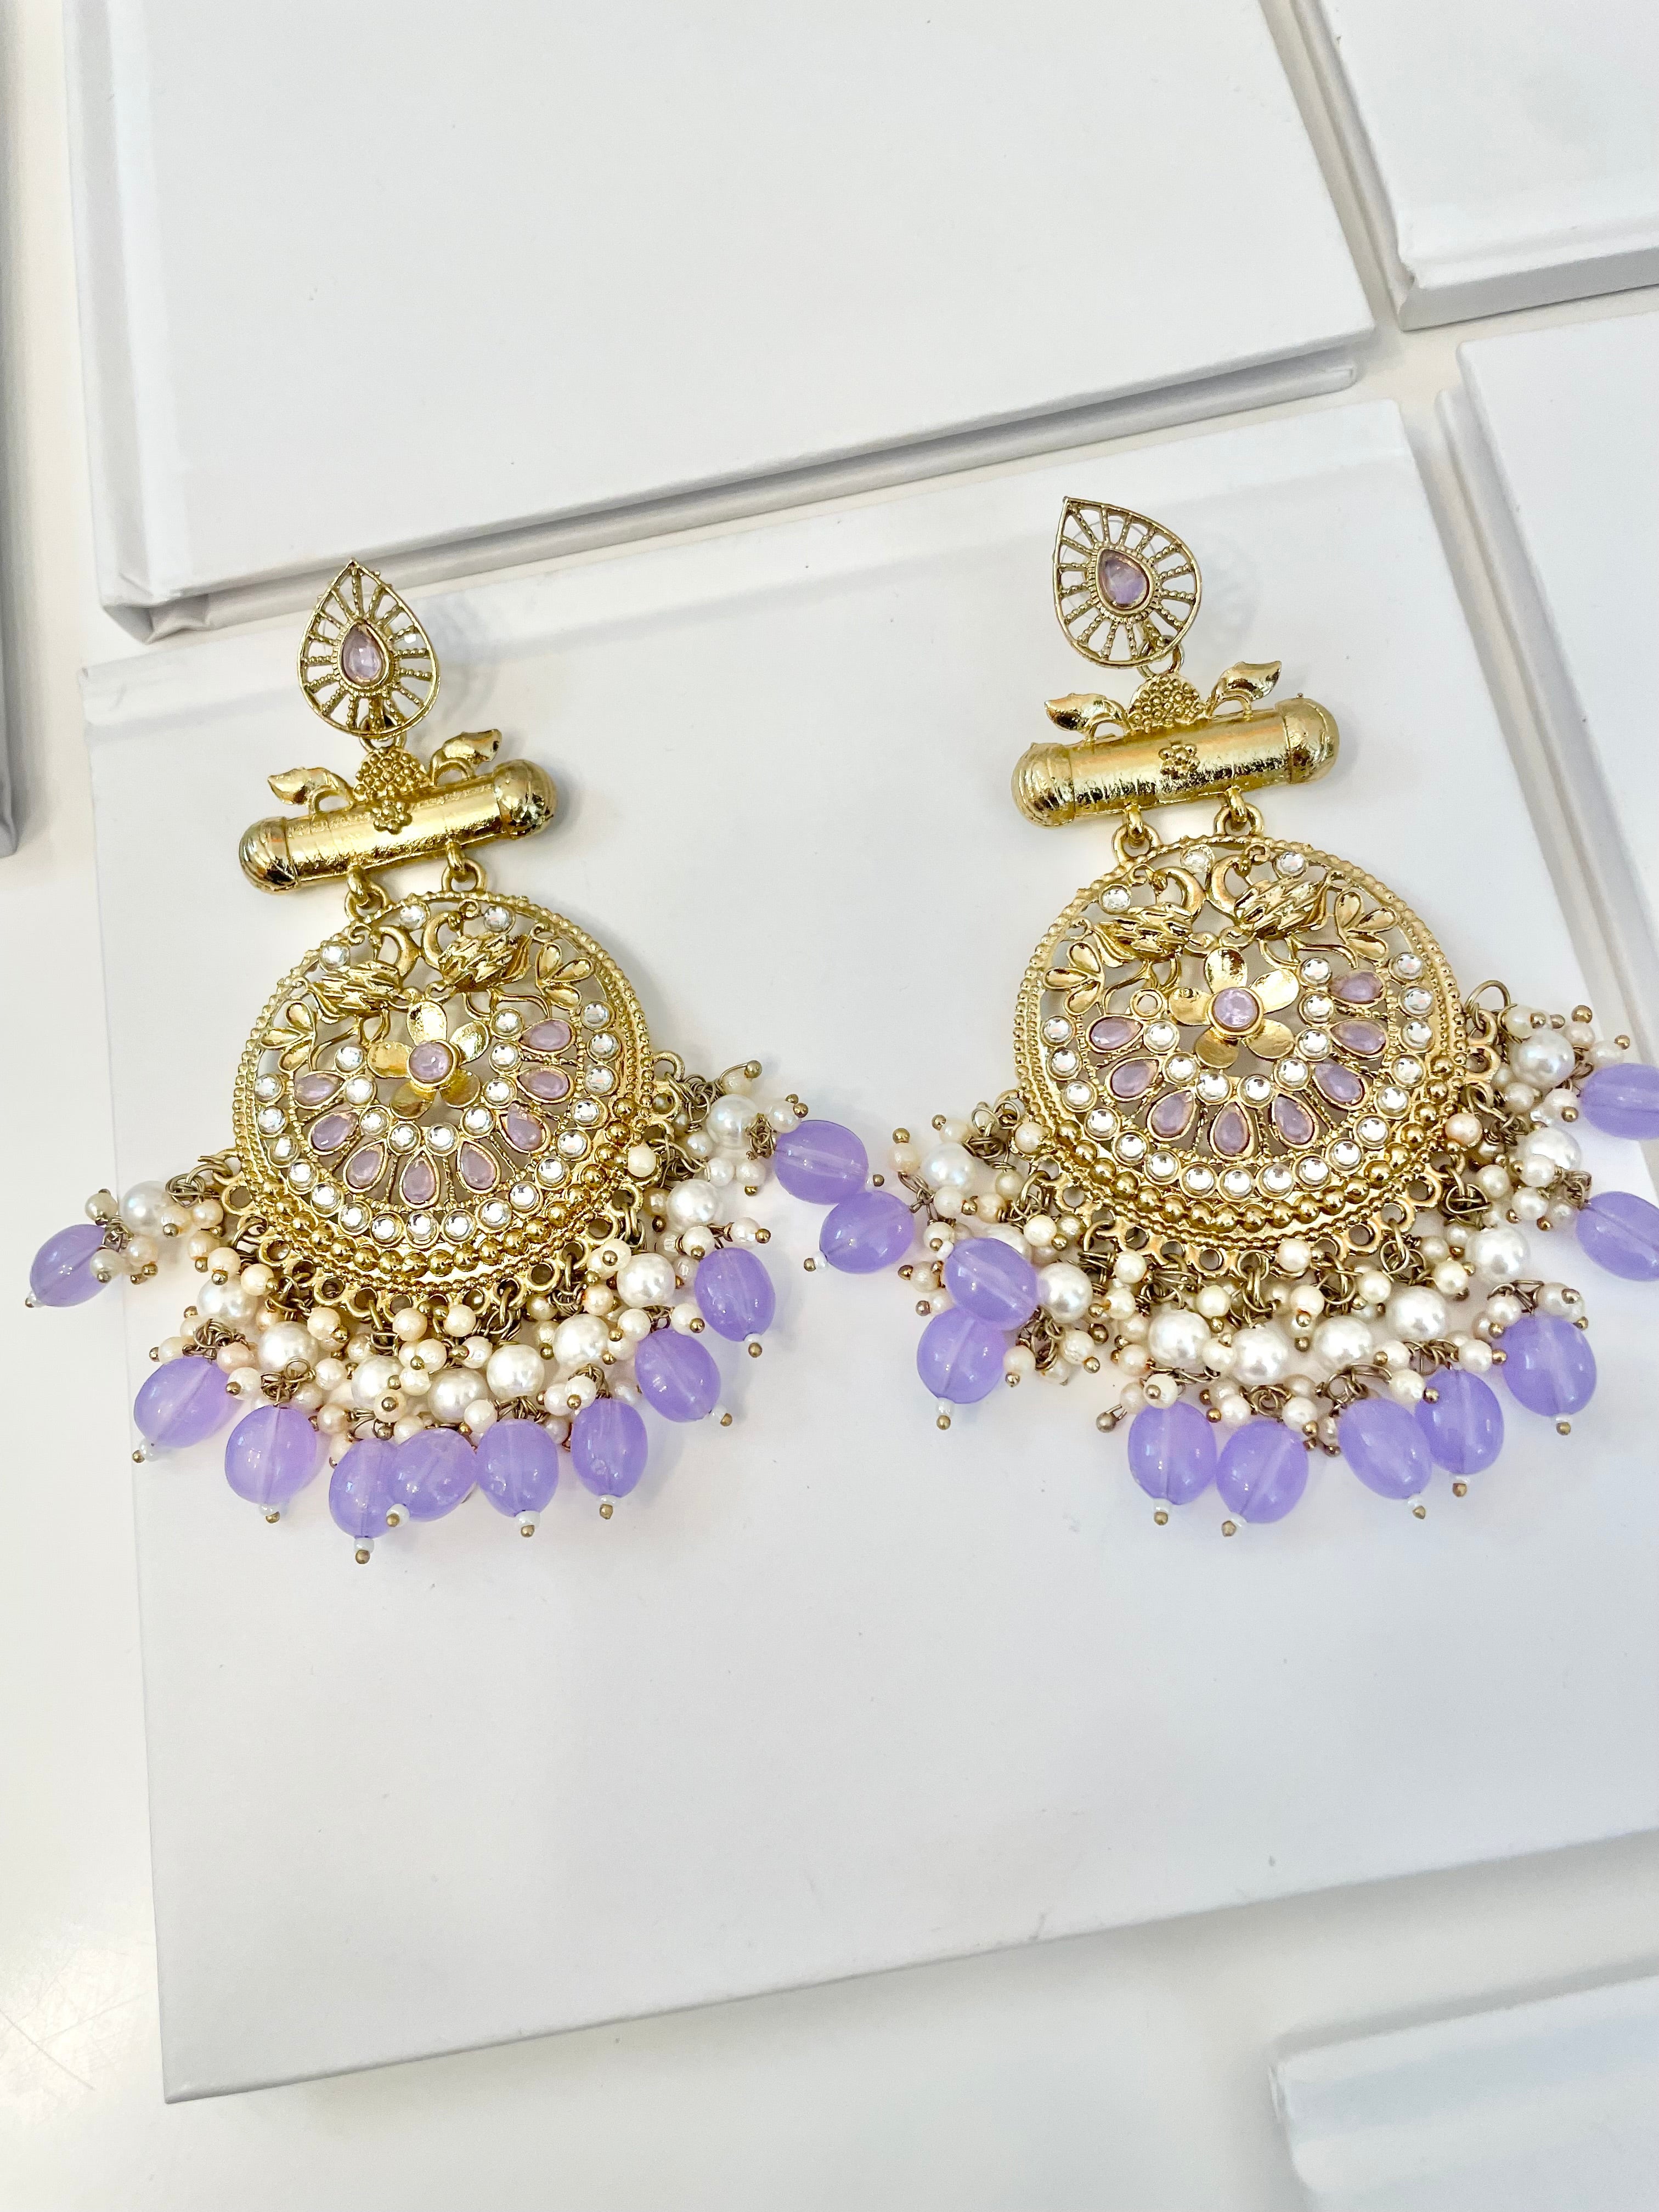 The most beautiful soft purple glass statement earrings....so feminine